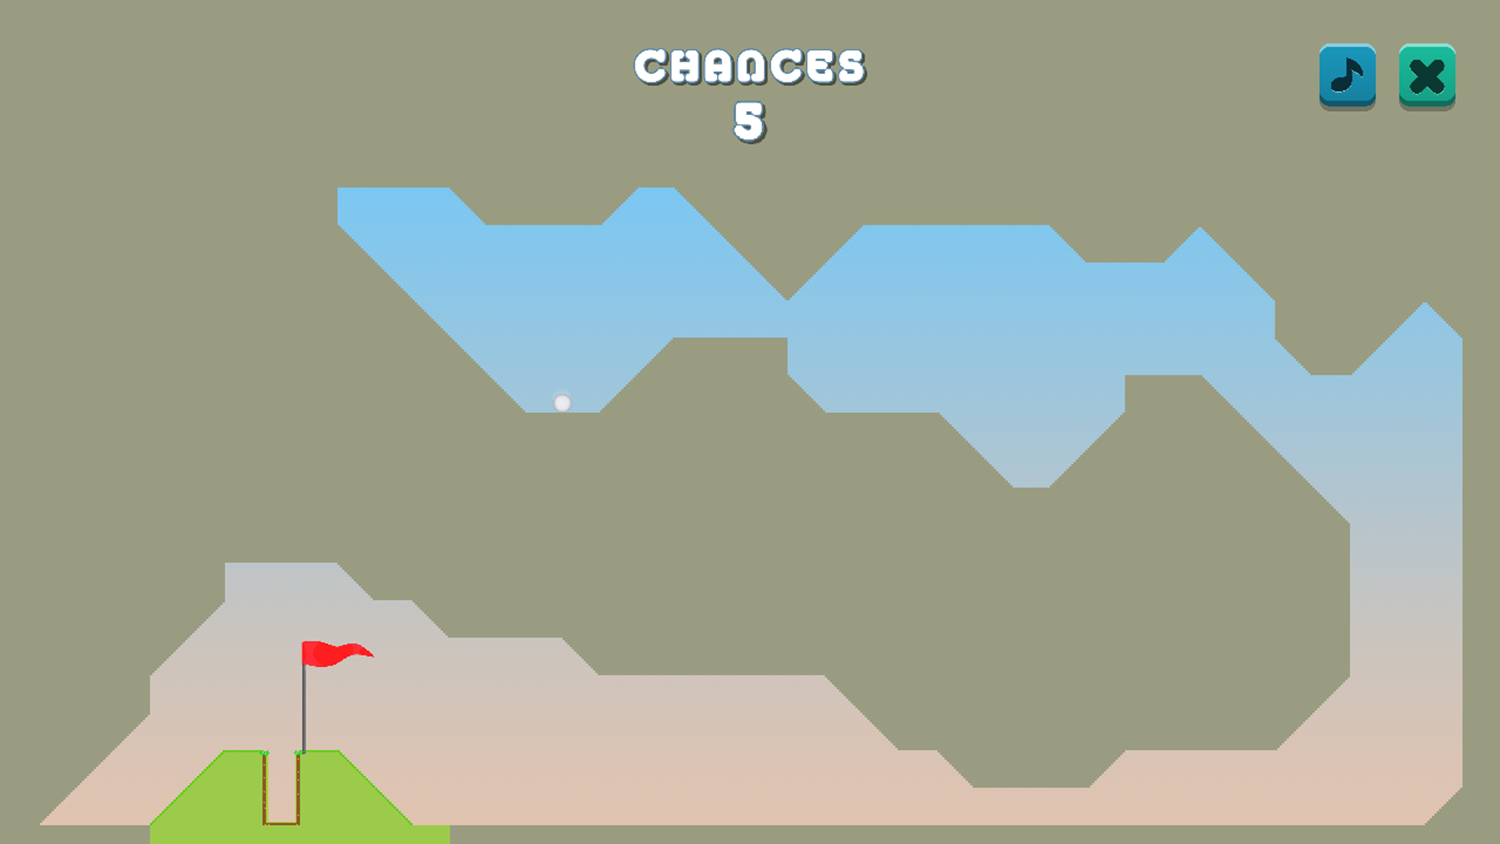 Golf Mania Game Level Progress Screenshot.